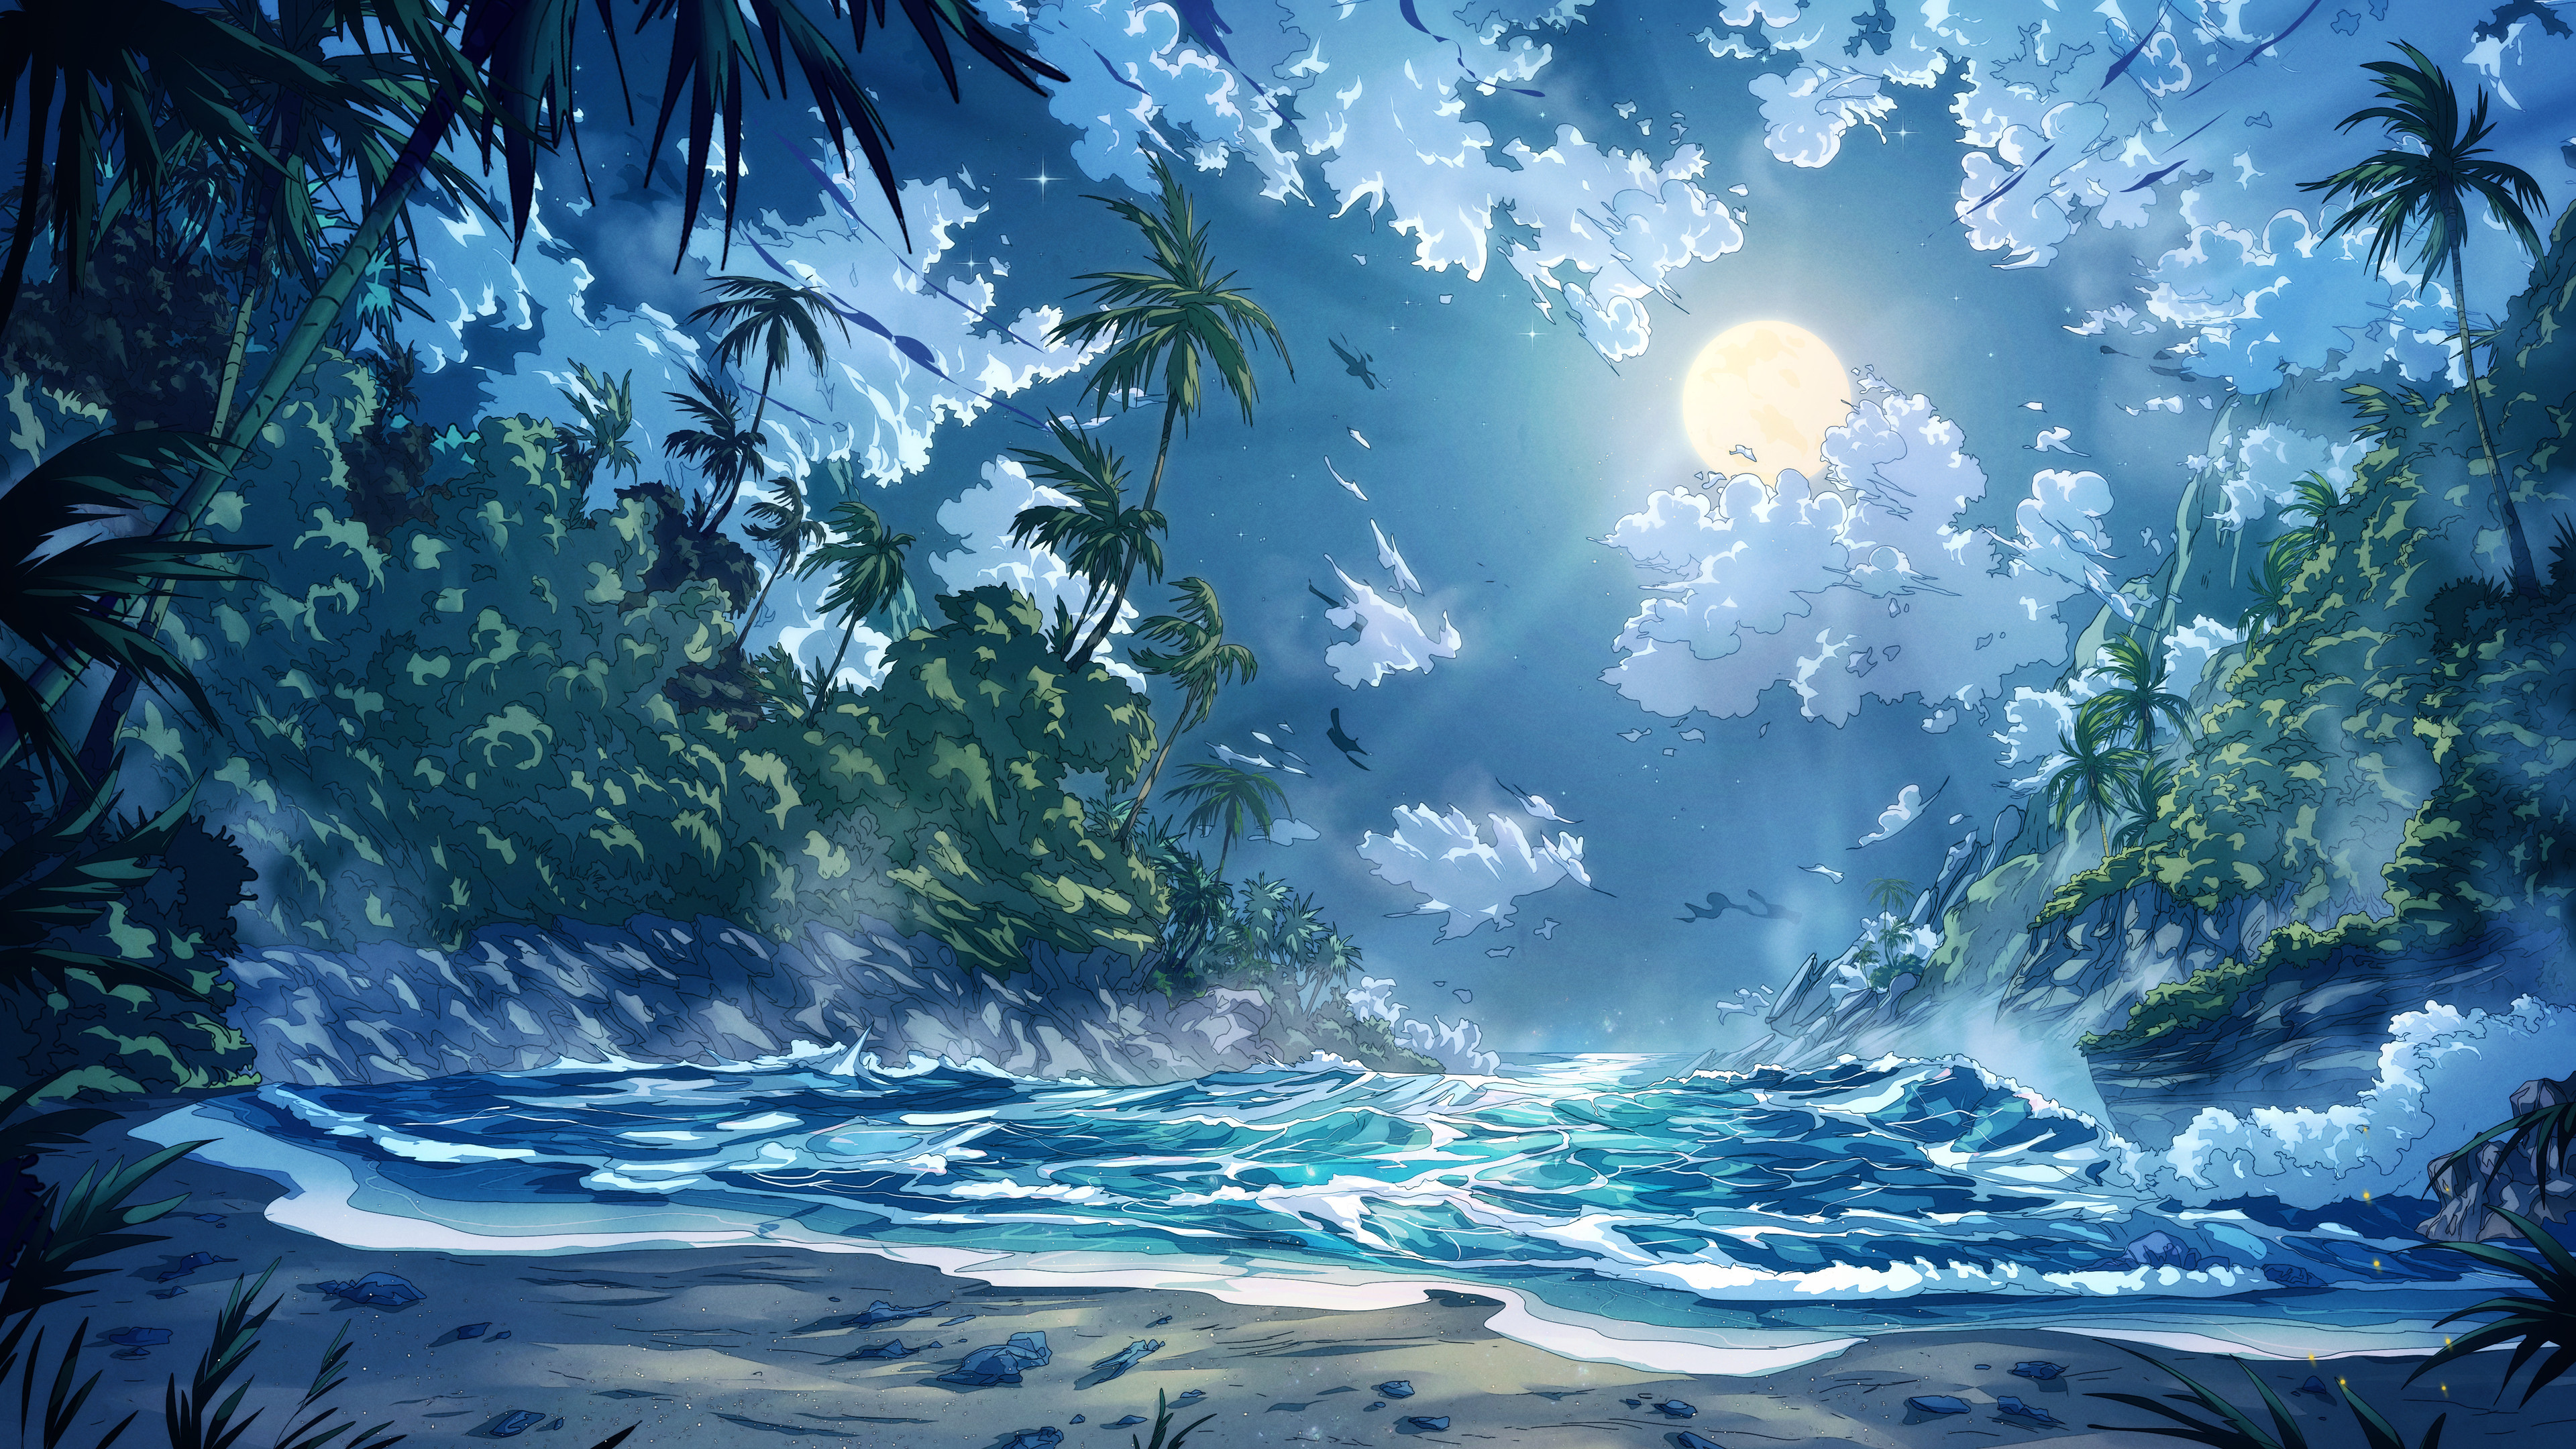 Christian Benavides Digital Art Fantasy Art Beach Moonlight Landscape Palm Trees Trees Clouds Artwor 3840x2160